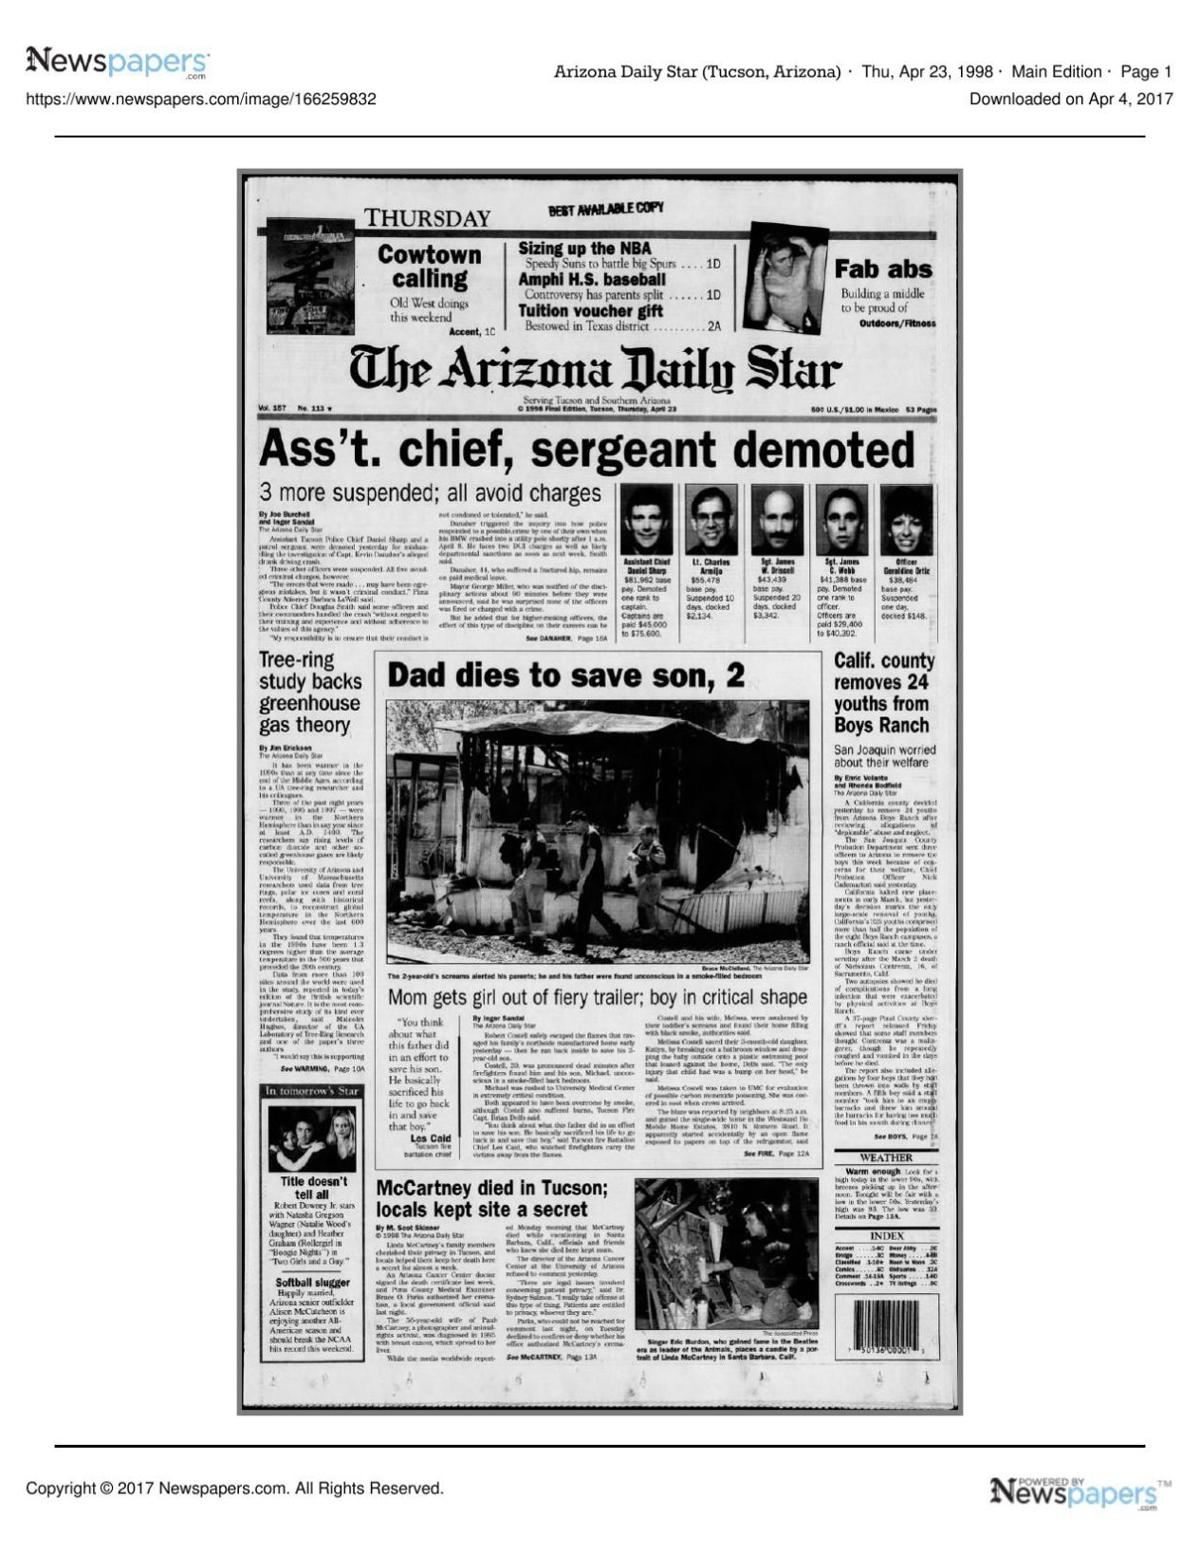 Arizona Daily Star front page April 23, 1998.pdf